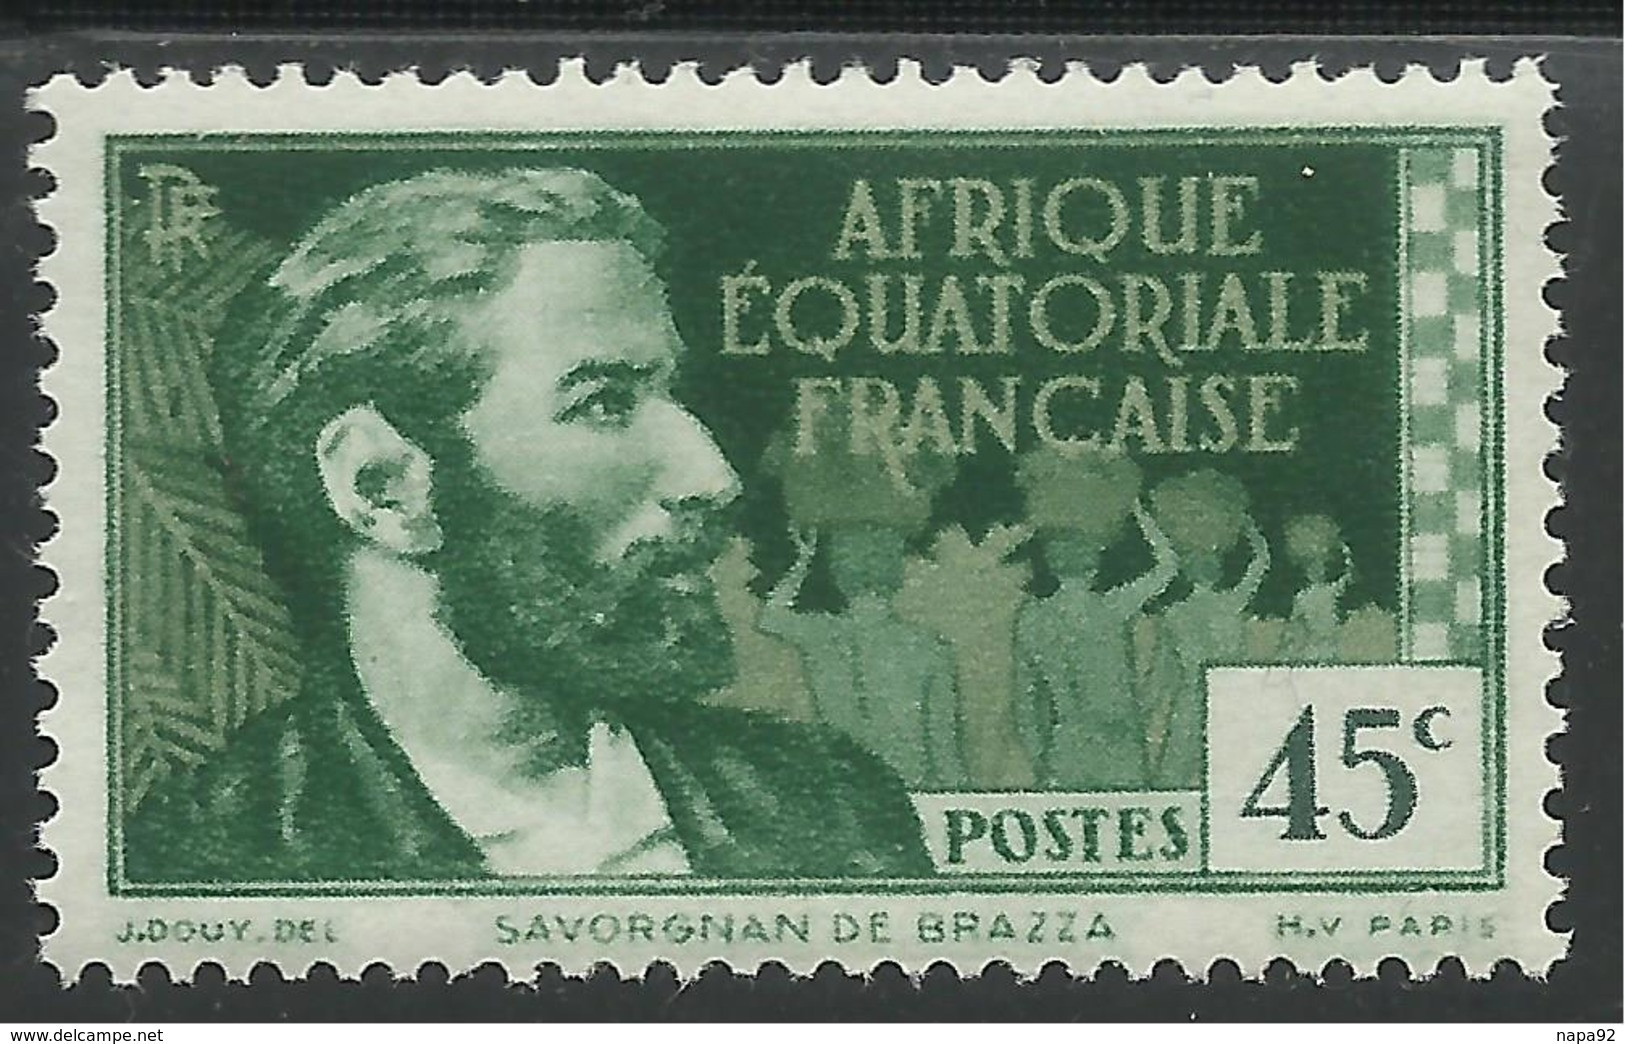 AFRIQUE EQUATORIALE FRANCAISE - AEF - A.E.F. - 1939 - YT 79** - Unused Stamps